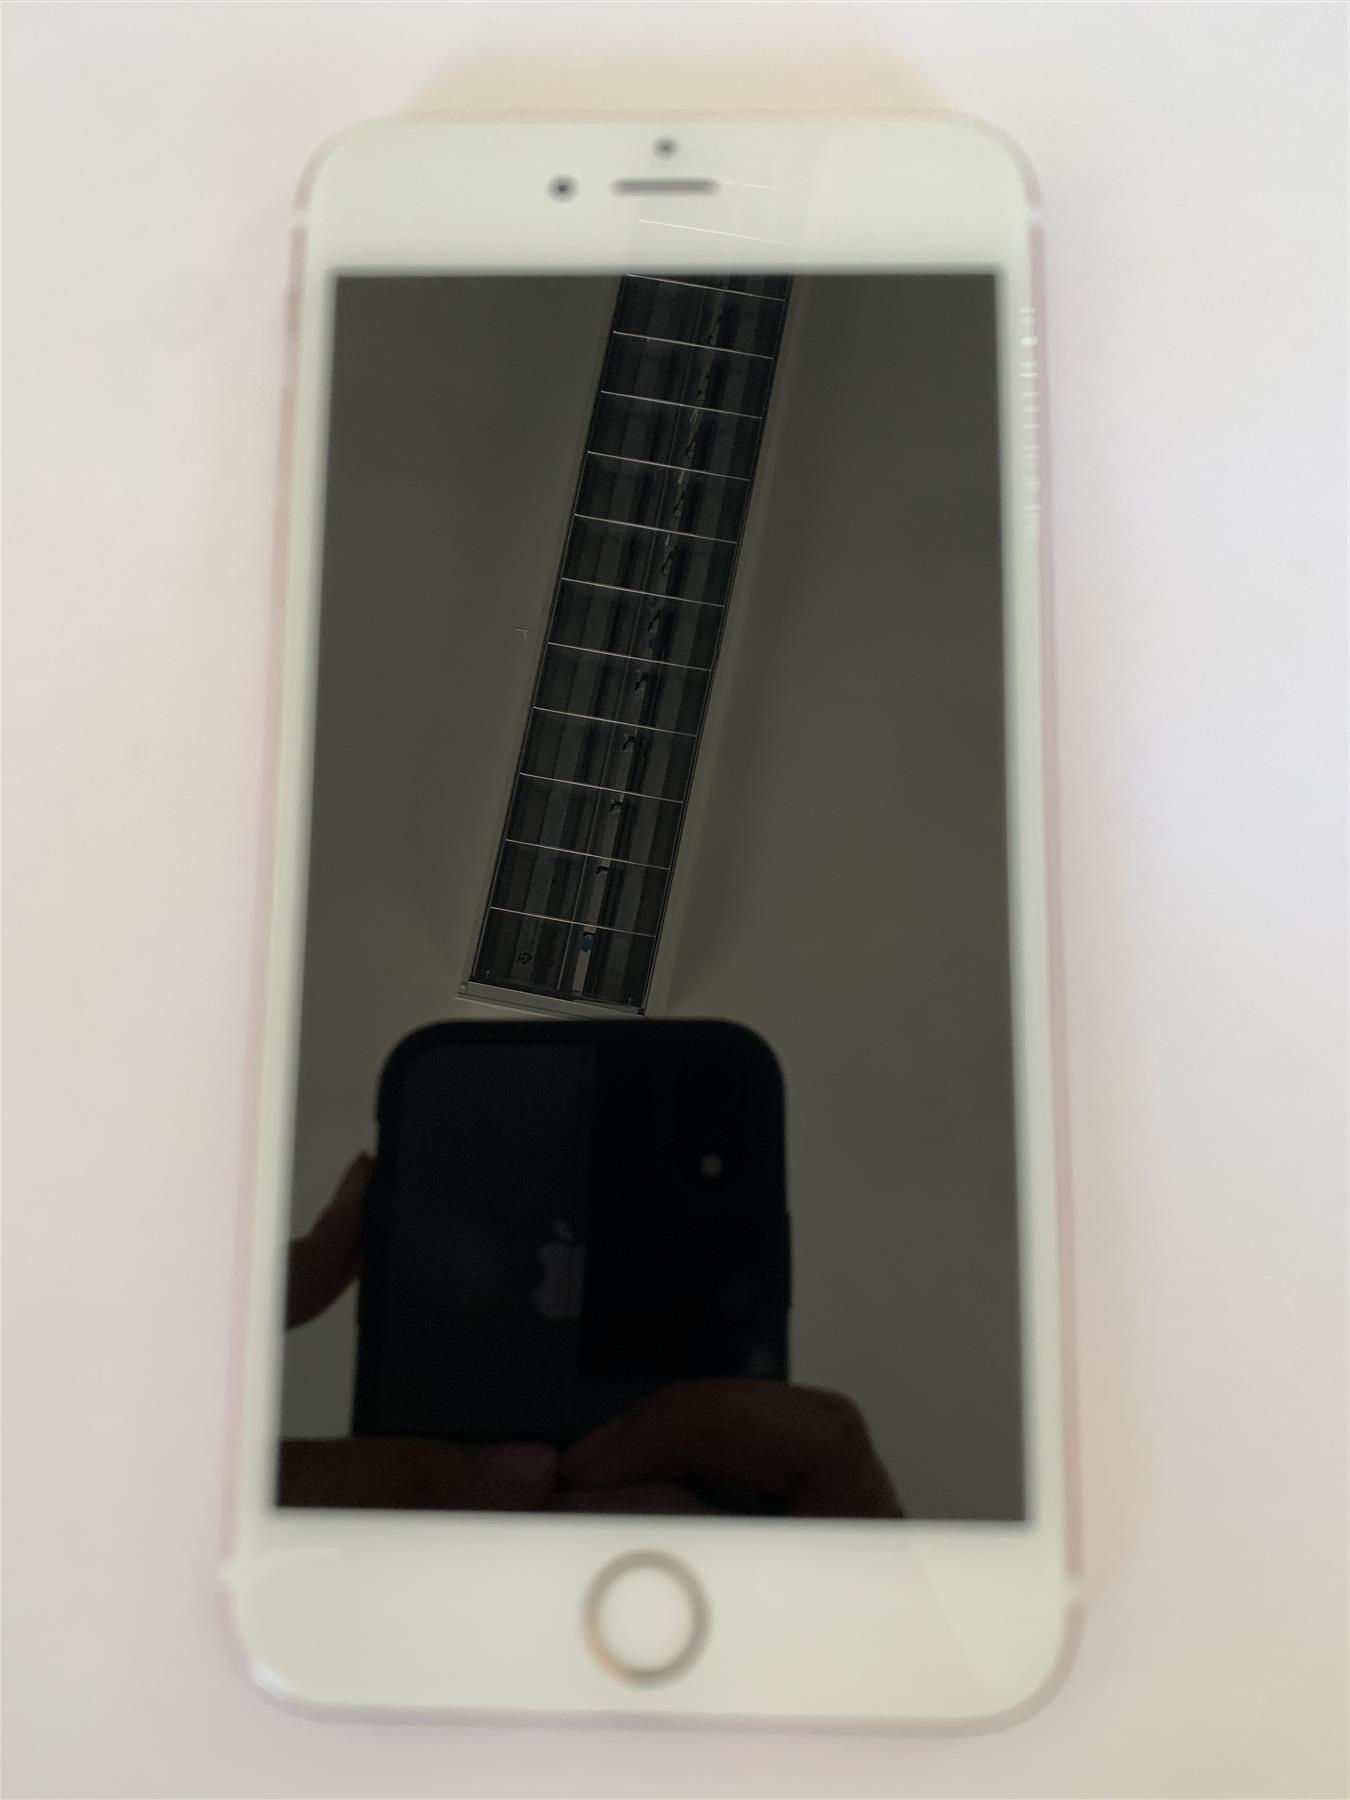 Apple iPhone 6S Plus 64GB Rose Gold - Used